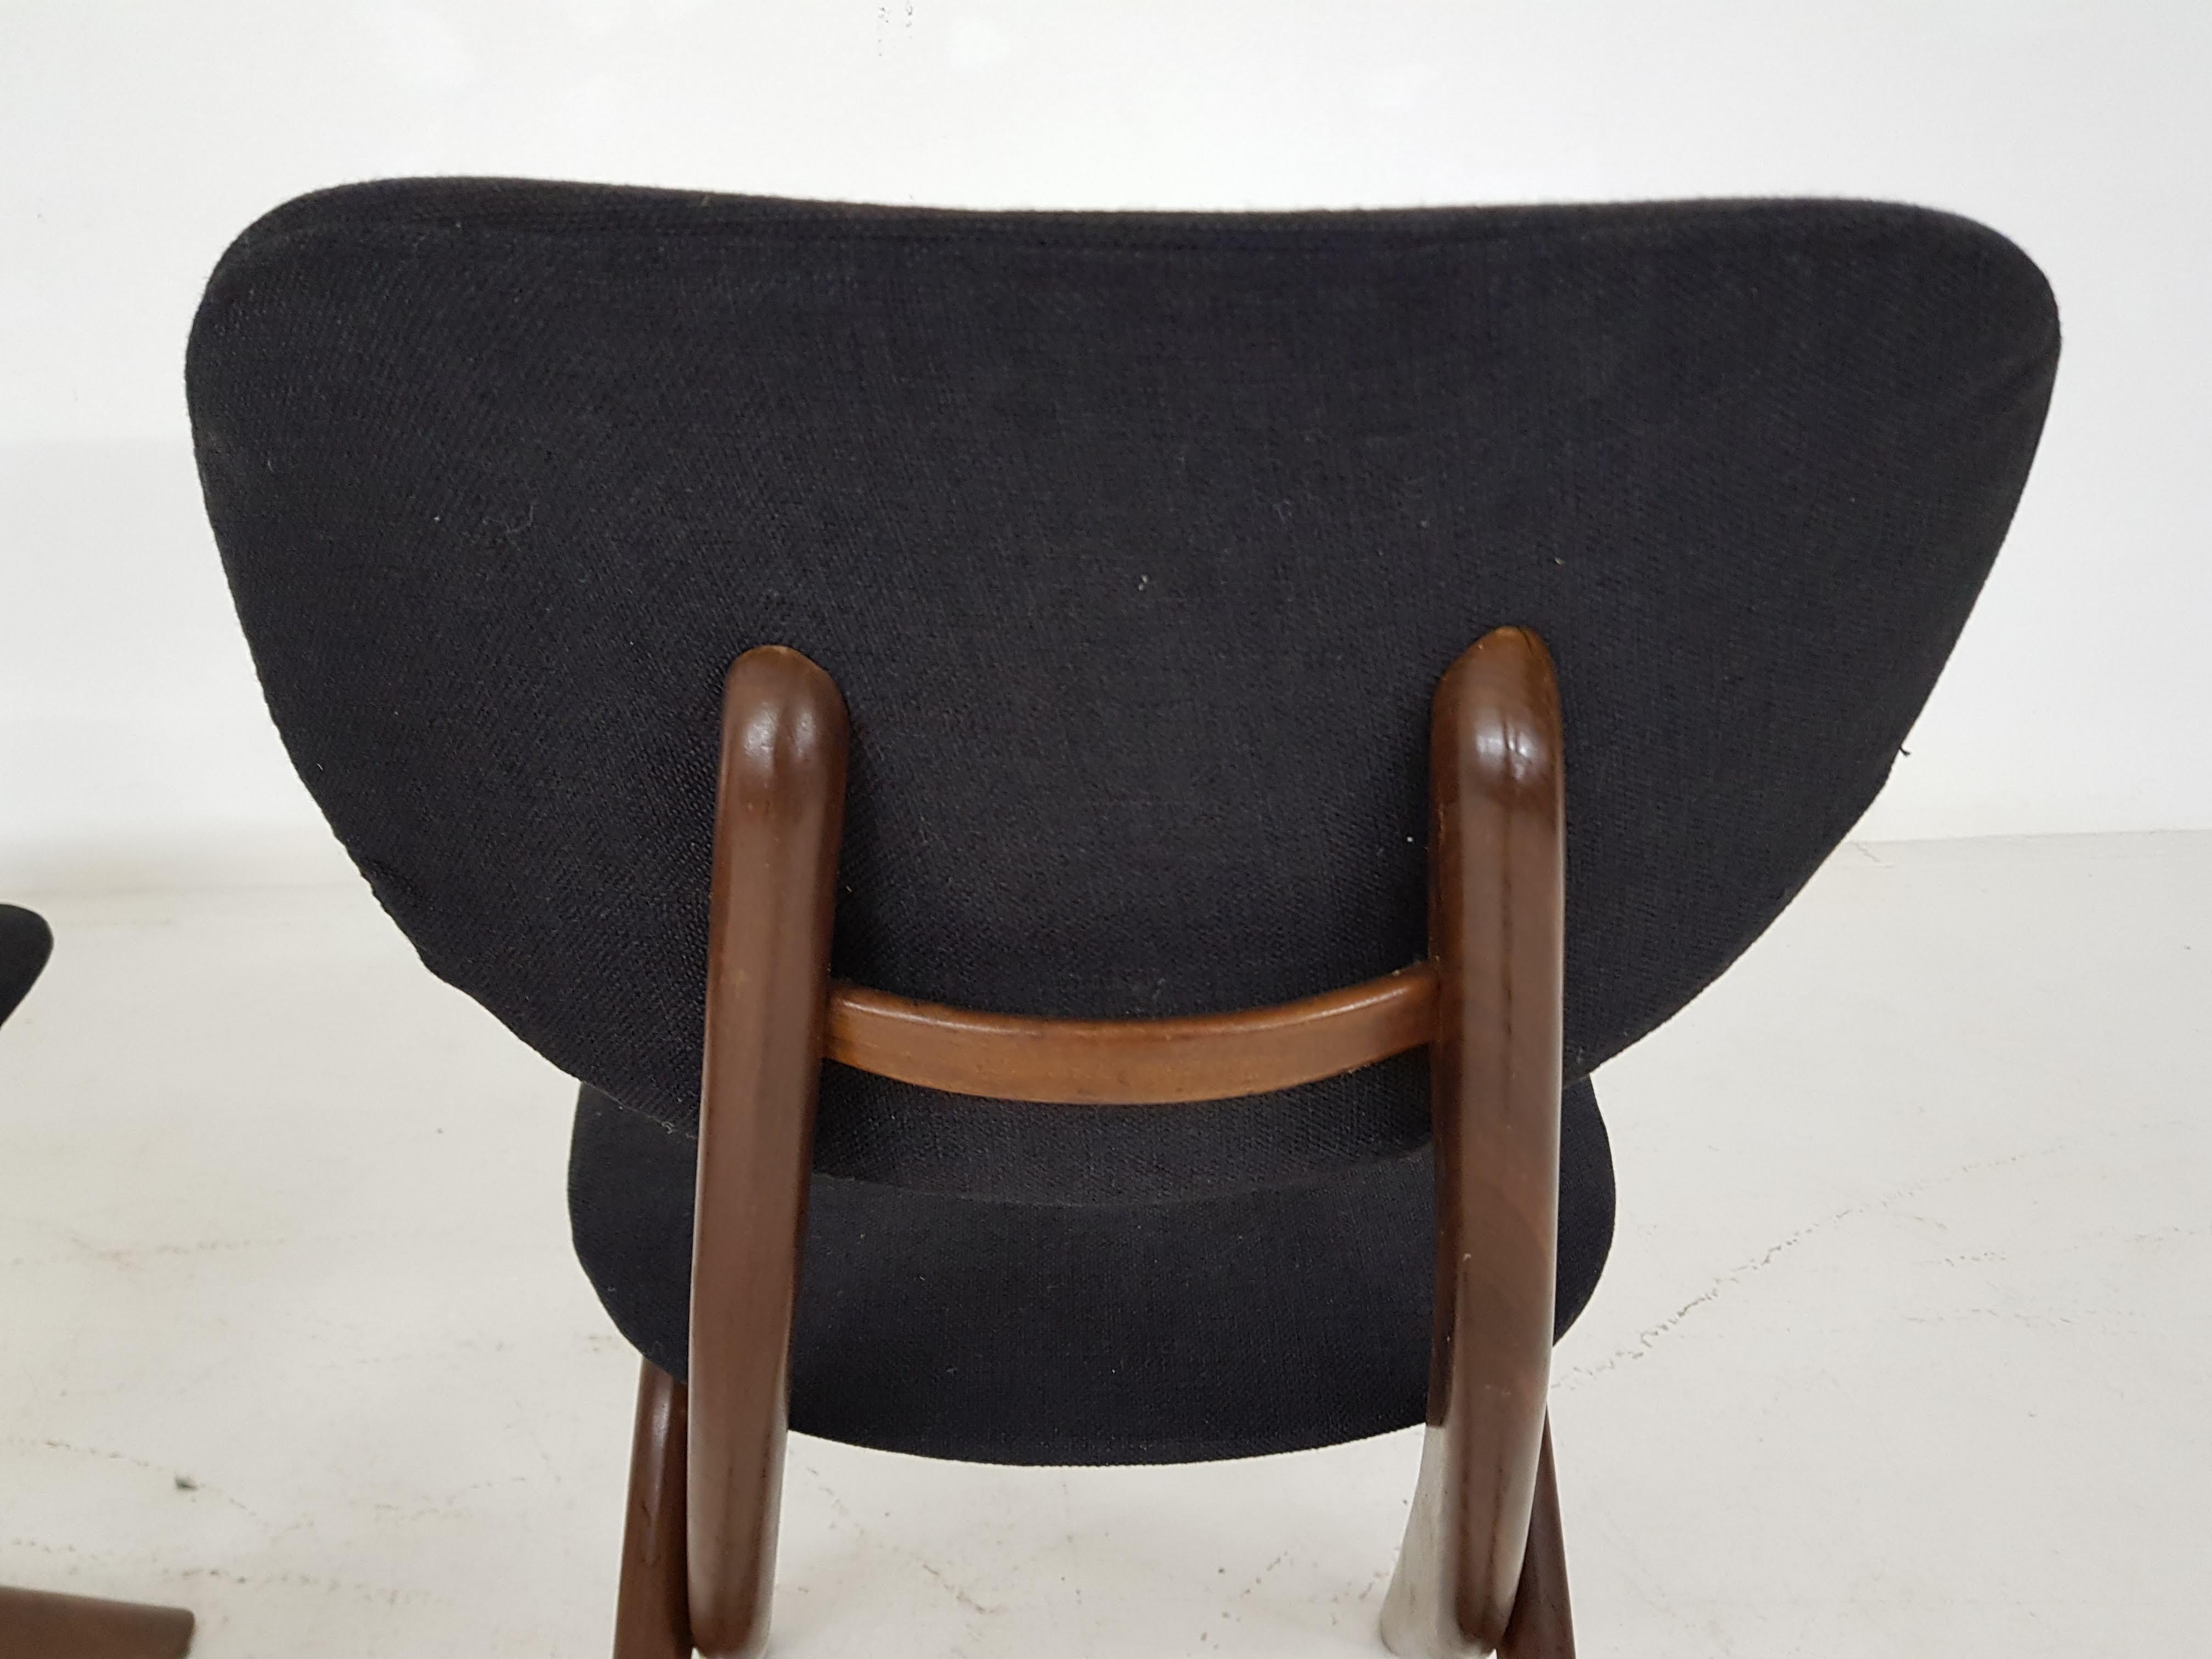 20th Century Dining Chairs by Louis van Teeffelen for Wébé, Dutch Design, 1950s